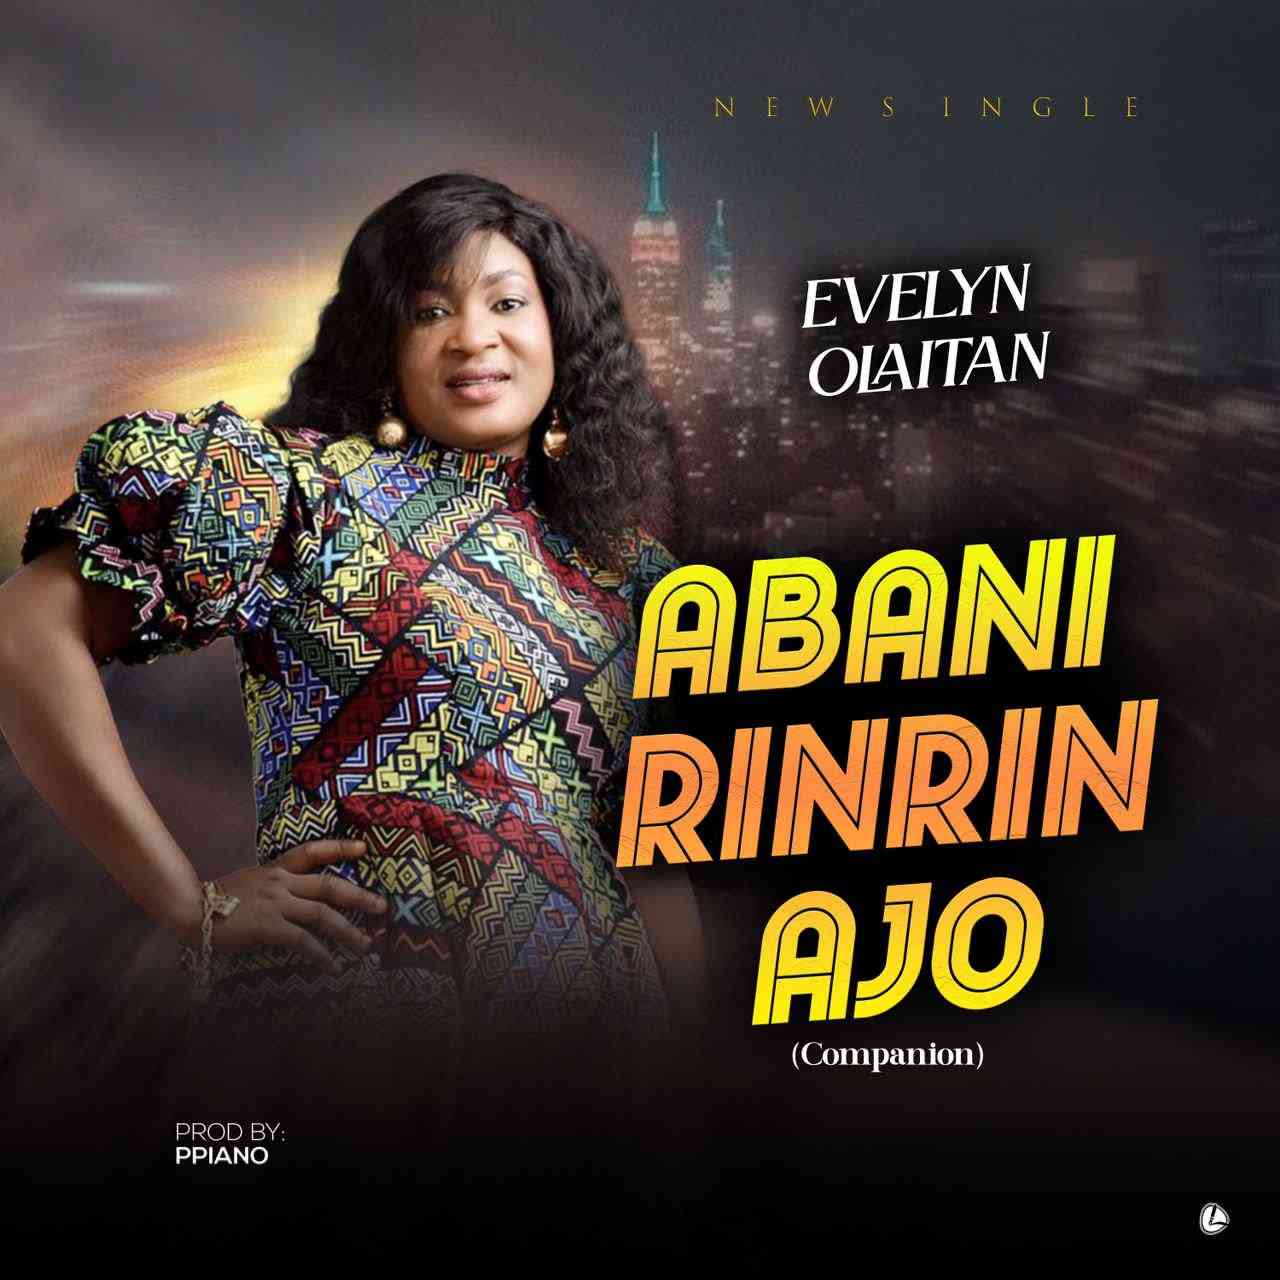 Download Mp3 Evelyn Olaitan Abani Rin Rin Ajo Companion